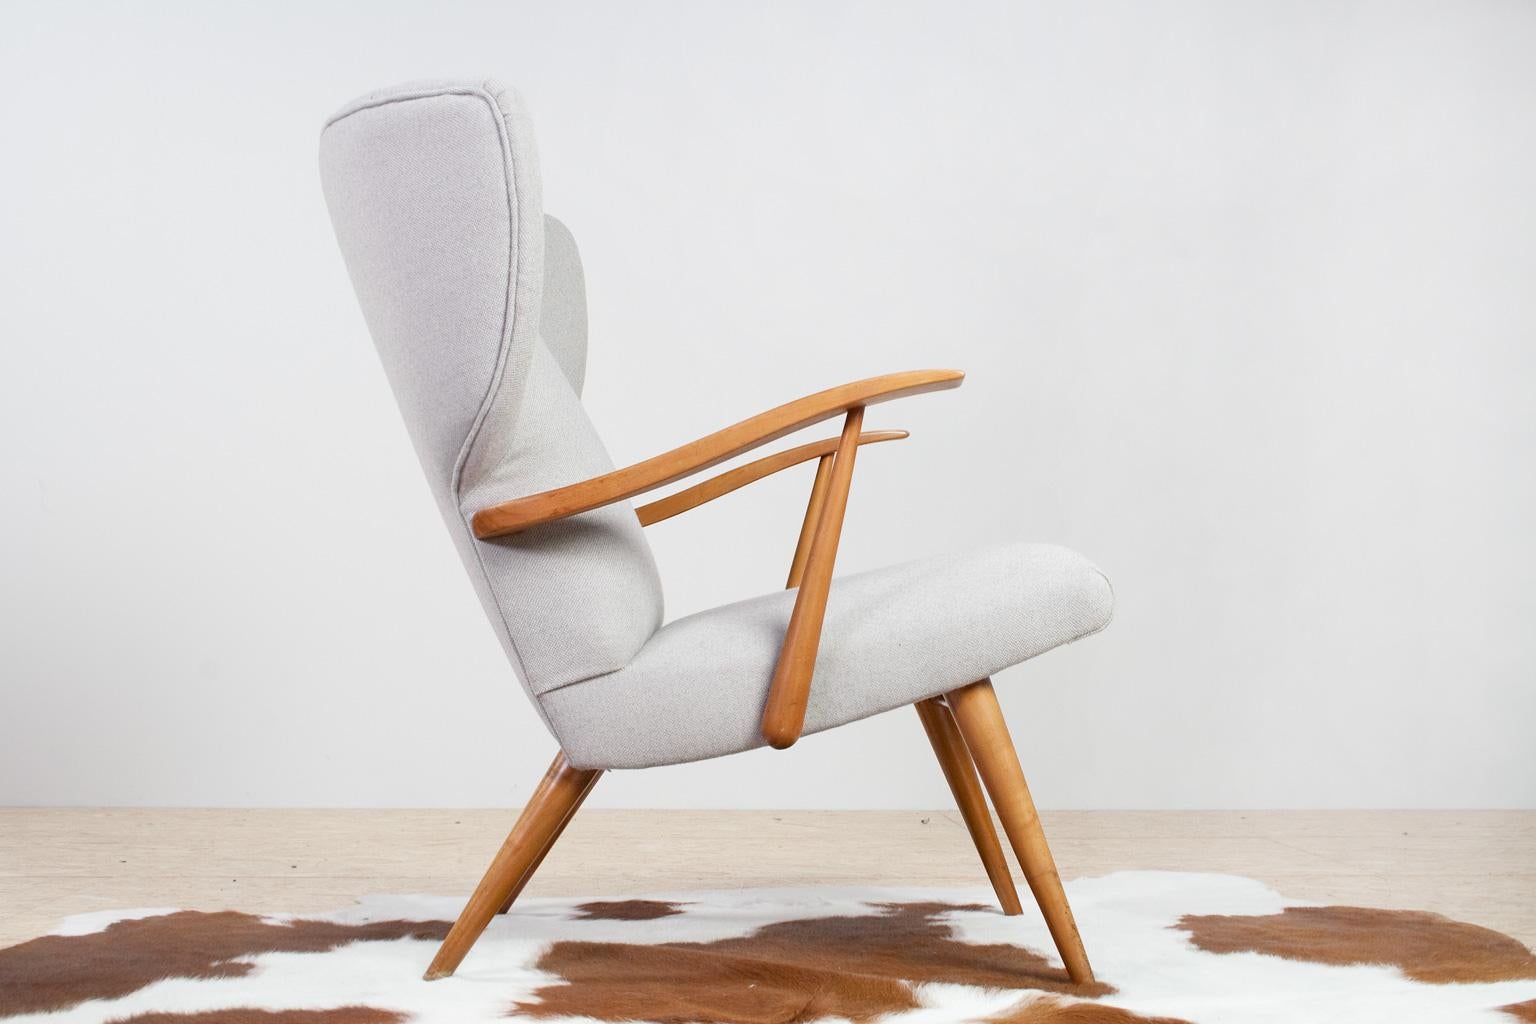 mid century modern wingback chair